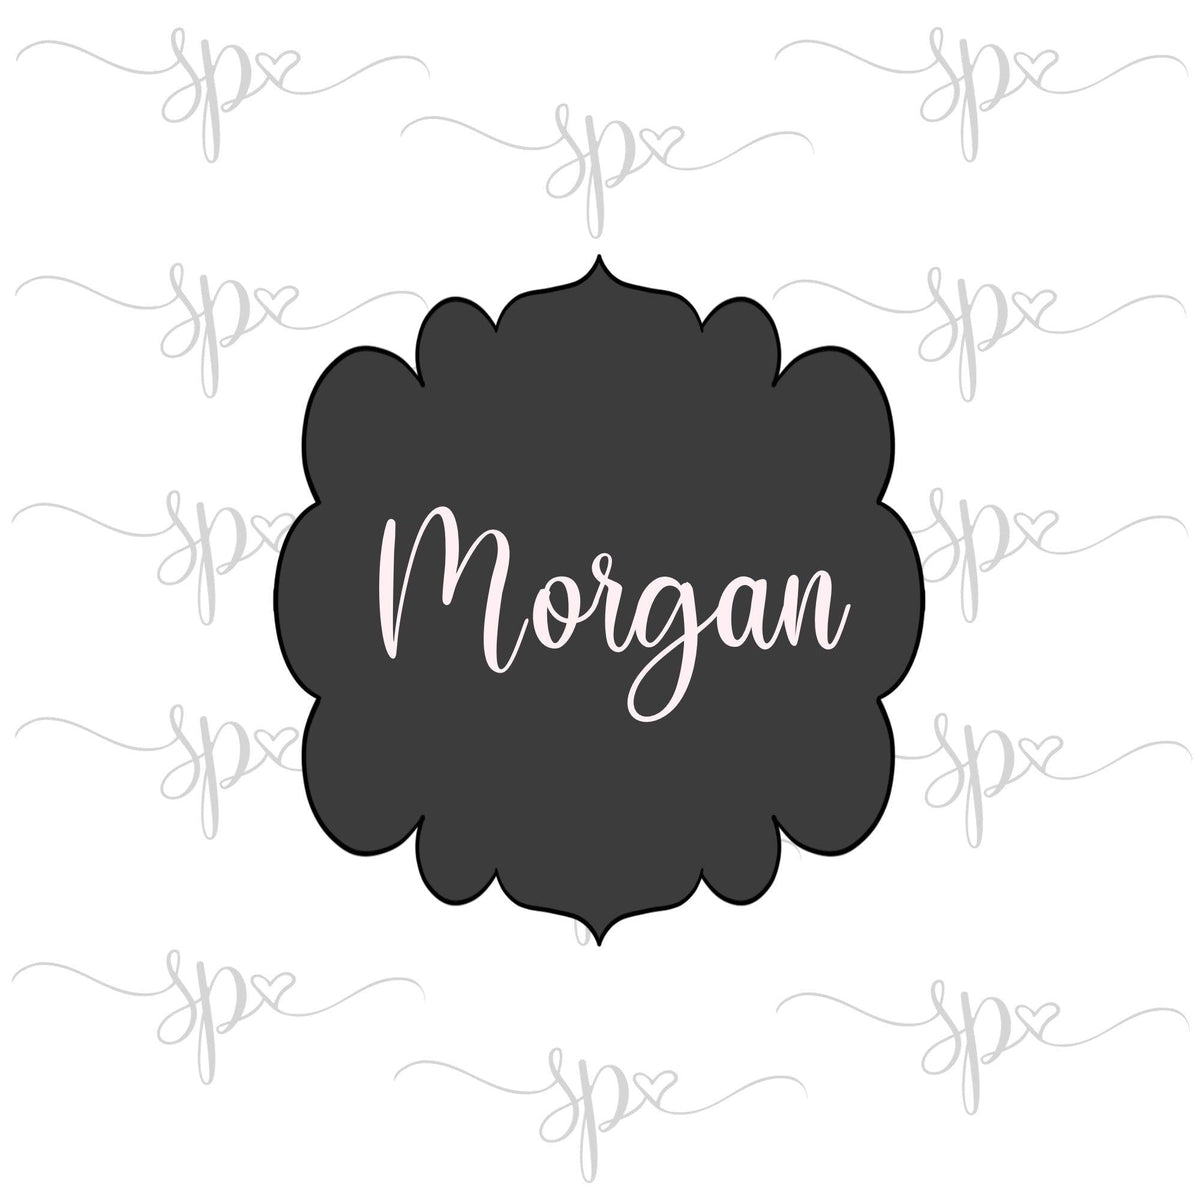 Morgan Plaque Cookie Cutter - Sweetleigh 